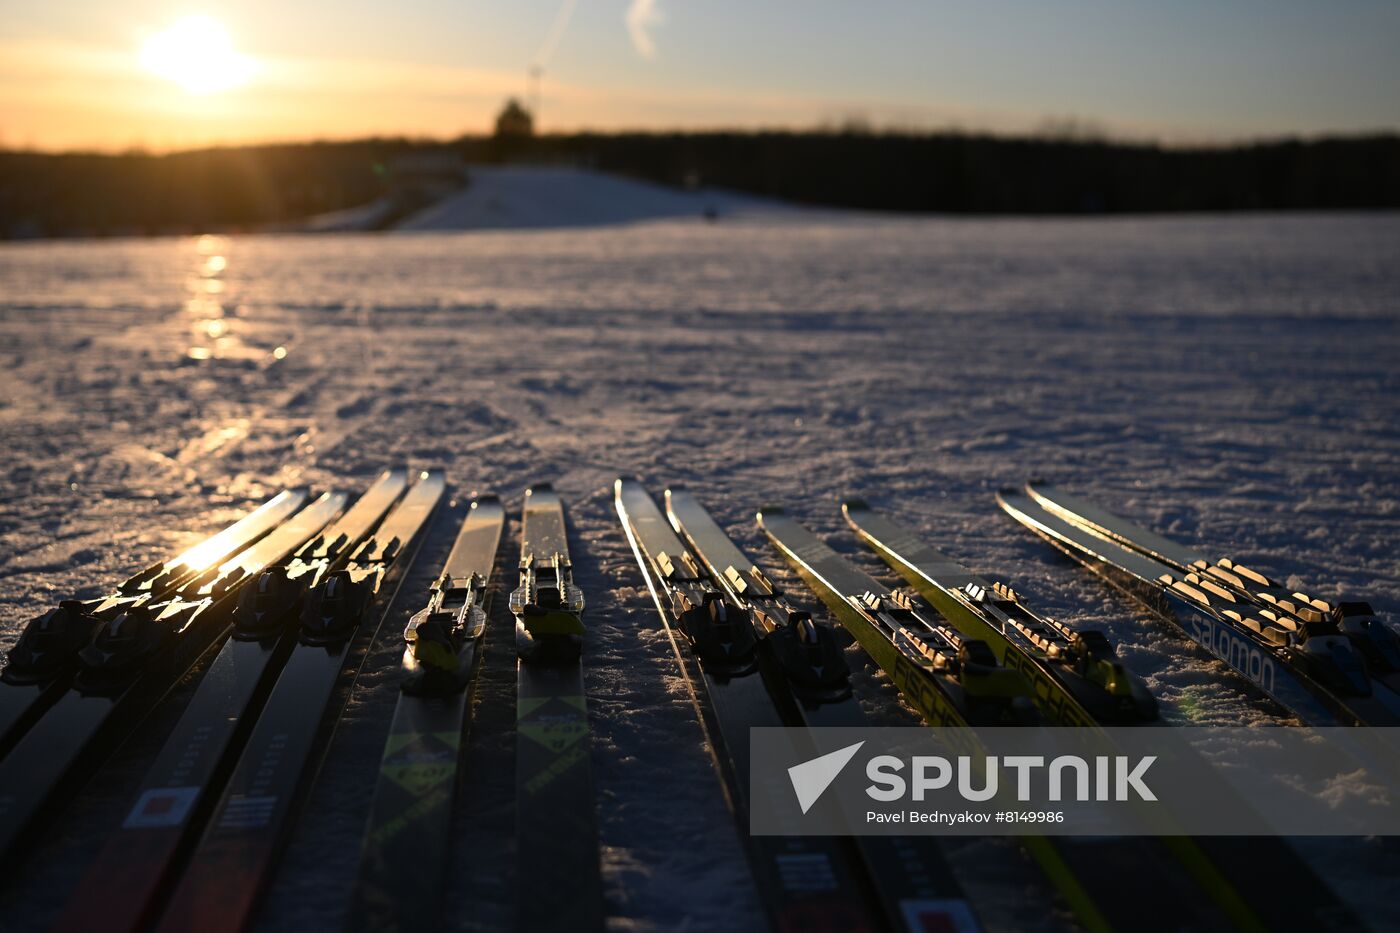 Russia Cross-Country Skiing Championship Training